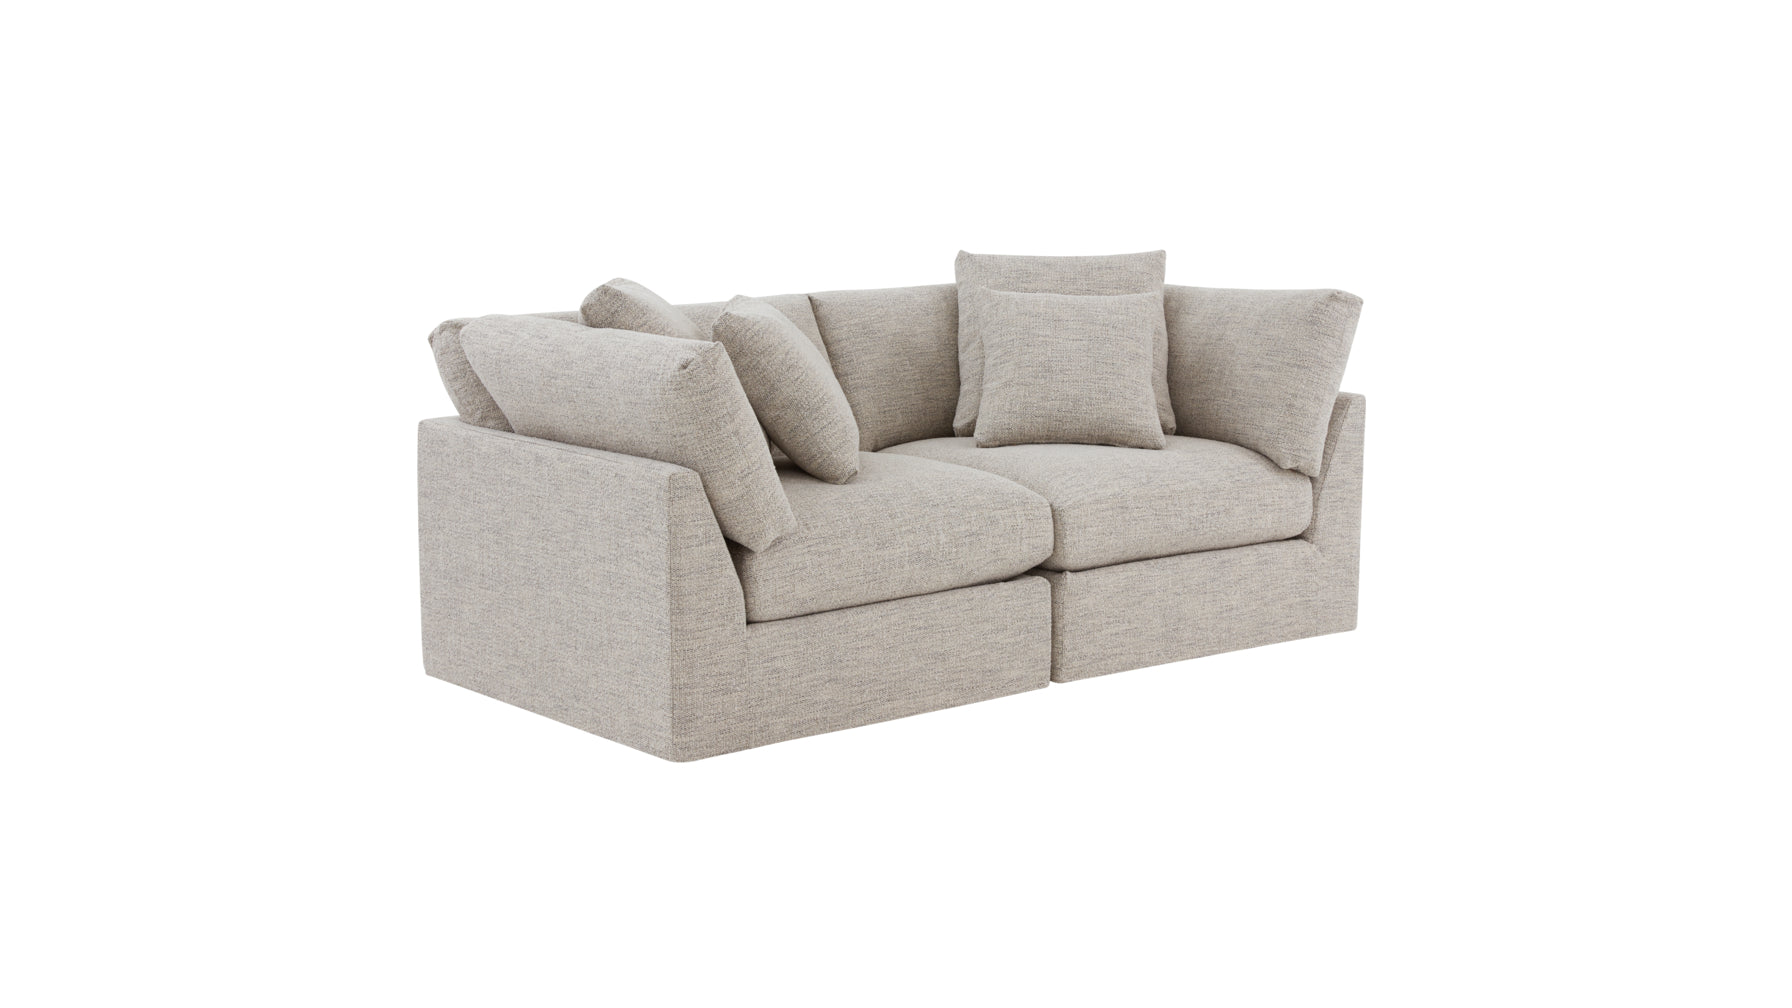 Get Together™ 2-Piece Modular Sofa, Large, Oatmeal - Image 4